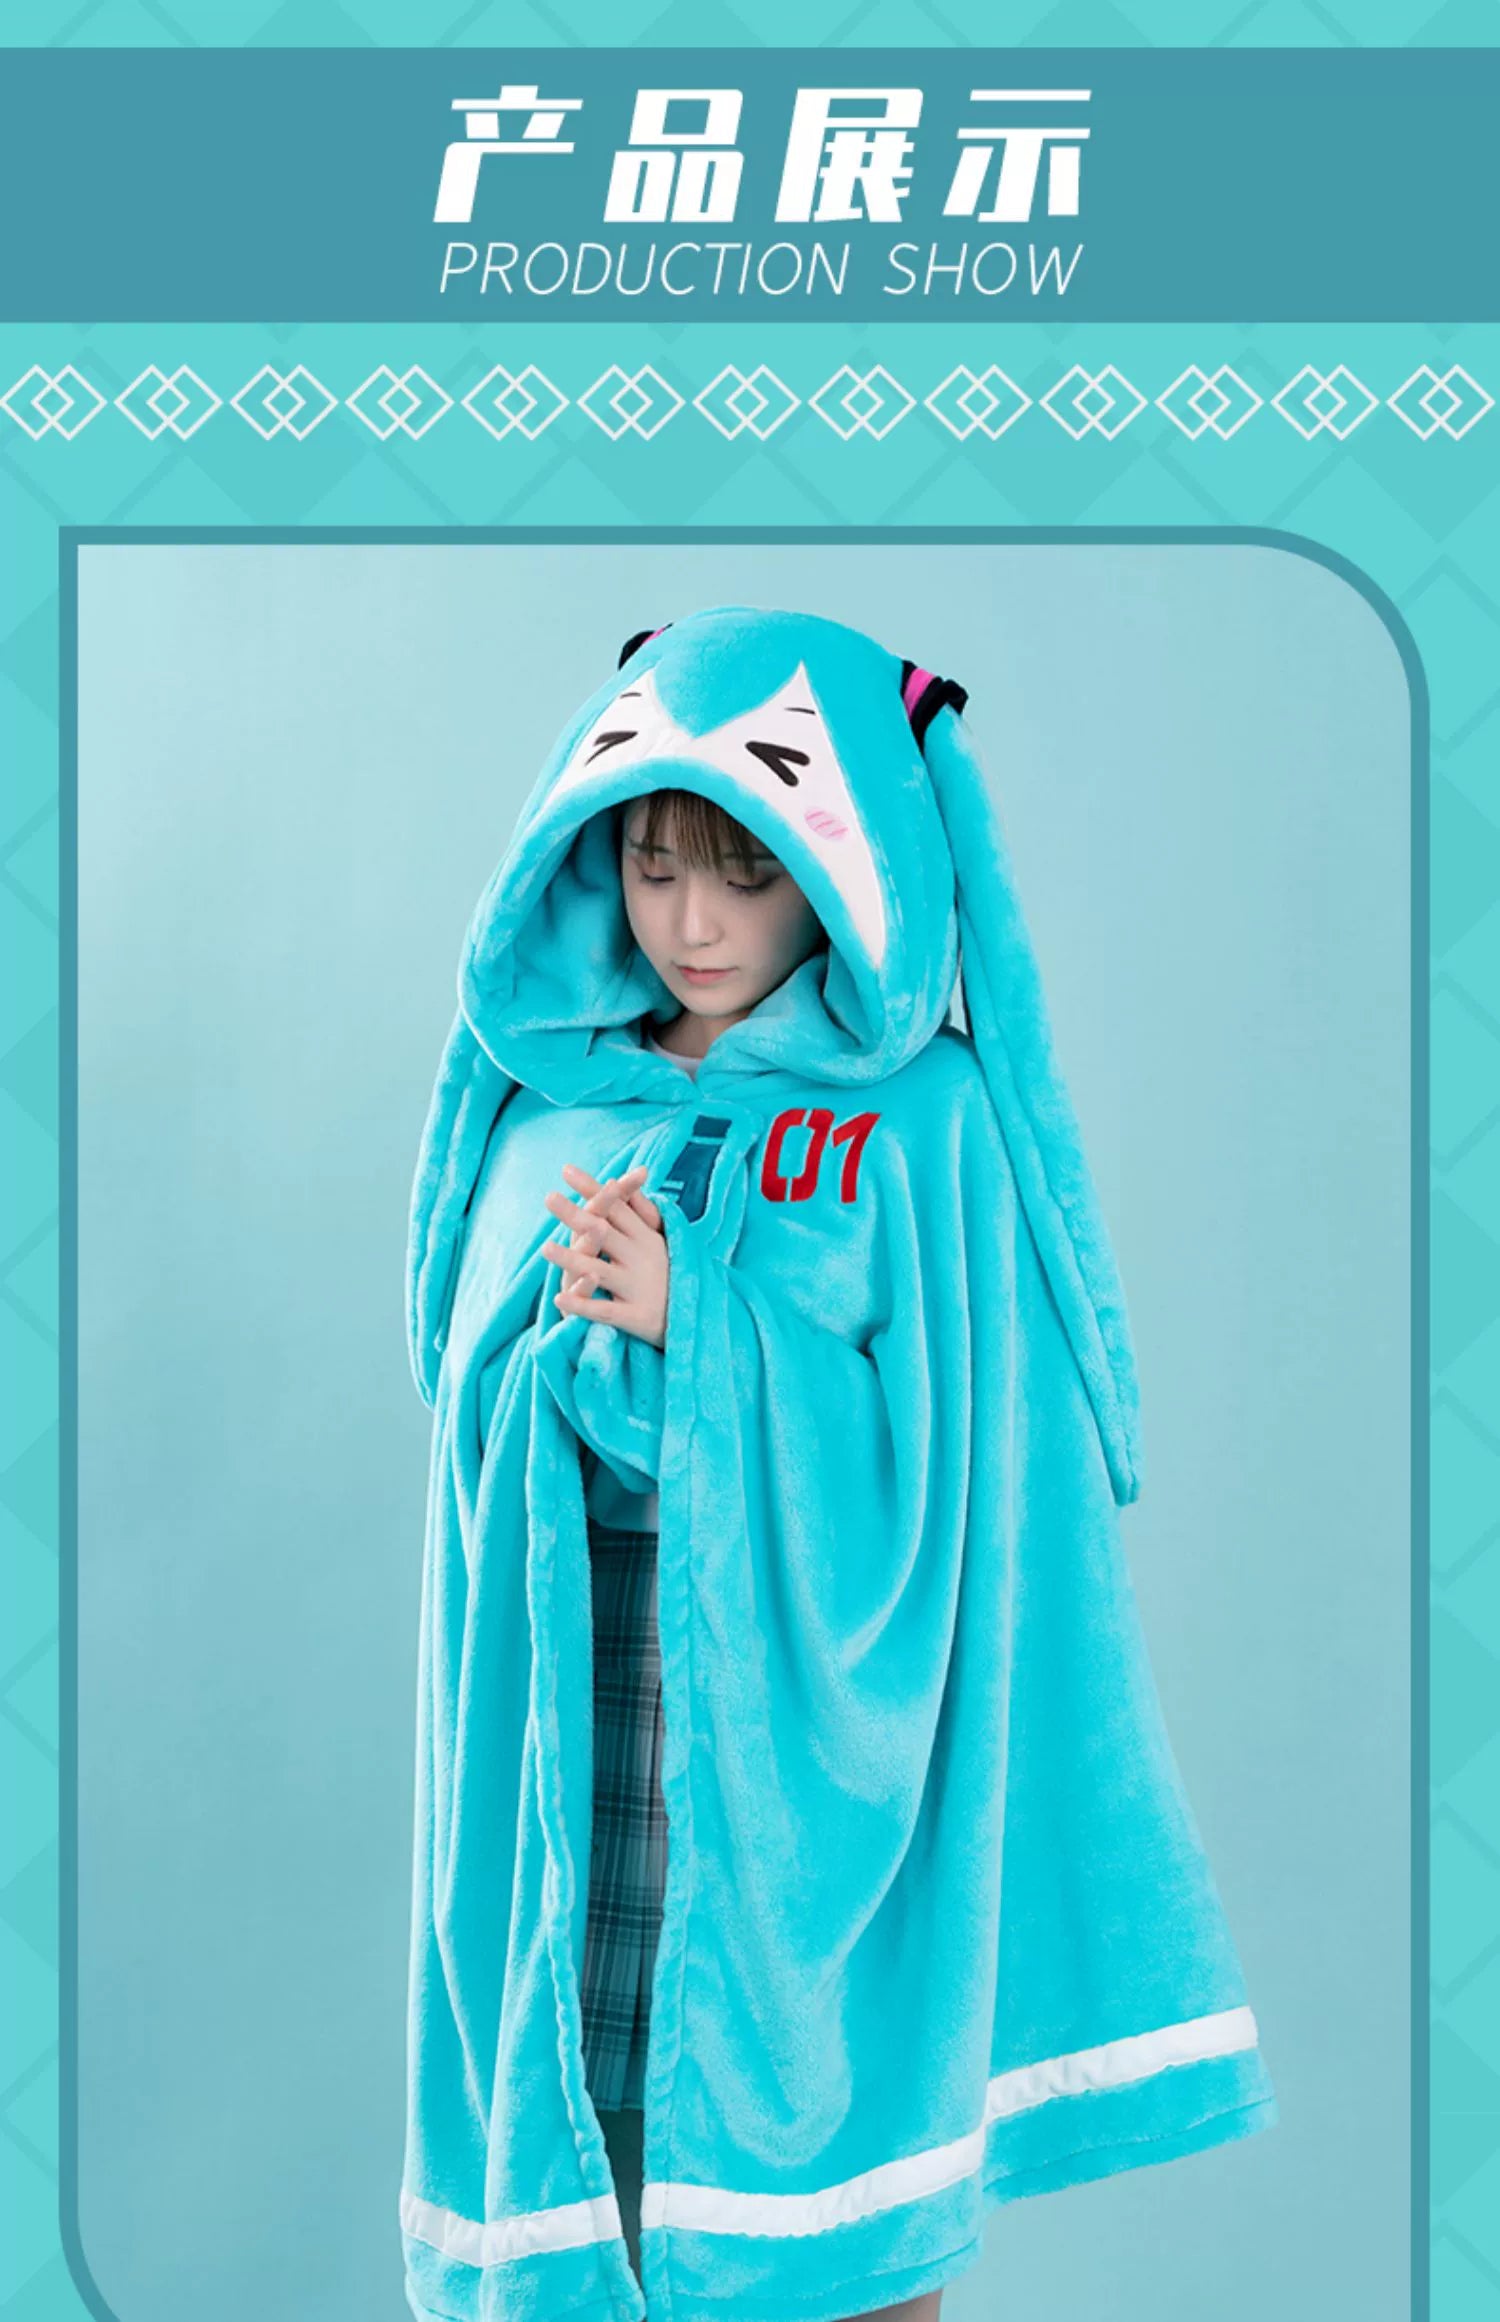 Moeyu Hatsune Miku Multi Use Blanket/Oversized Hoodie